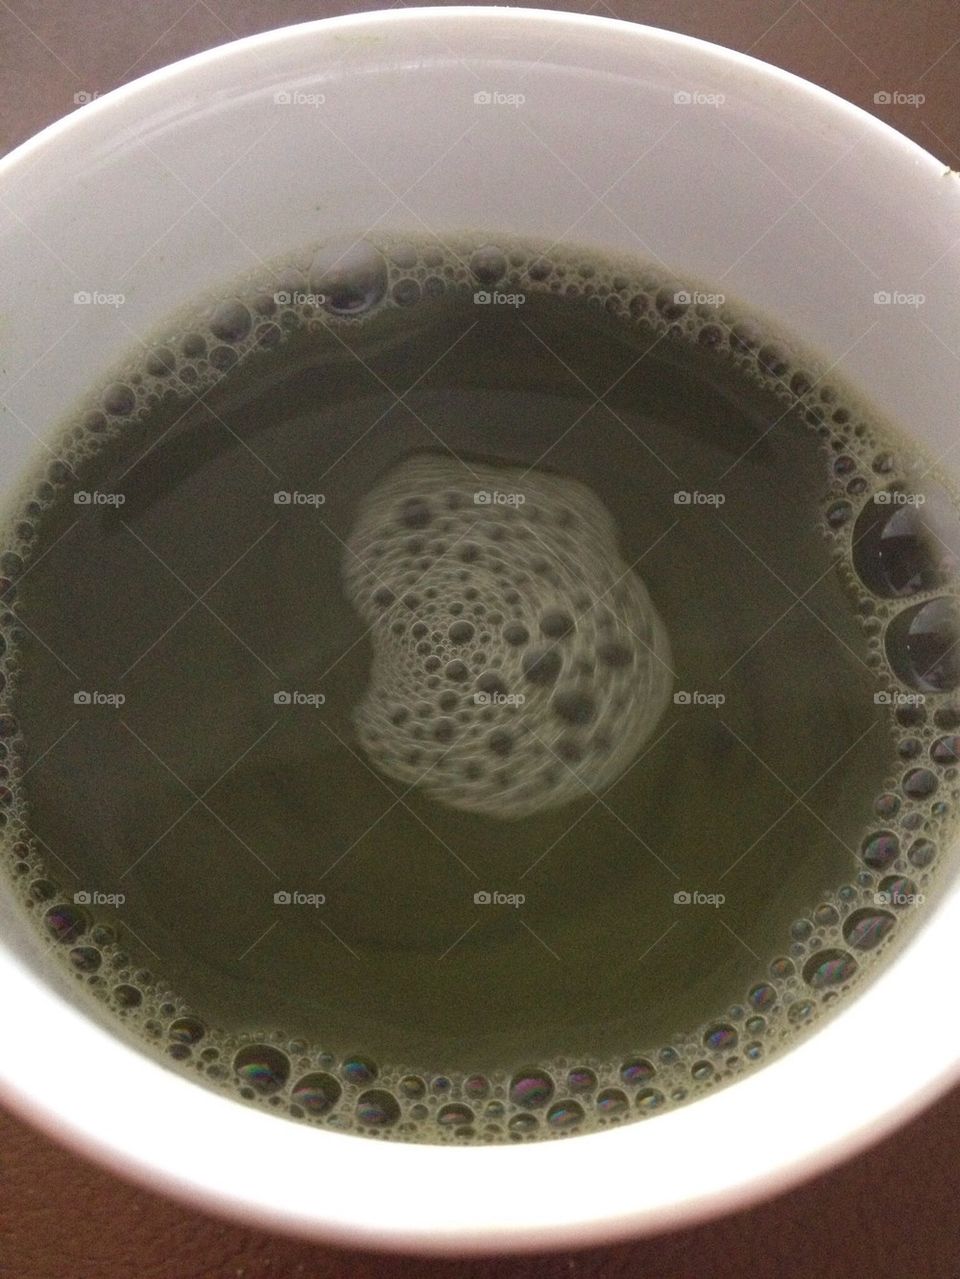 Green tea in the making